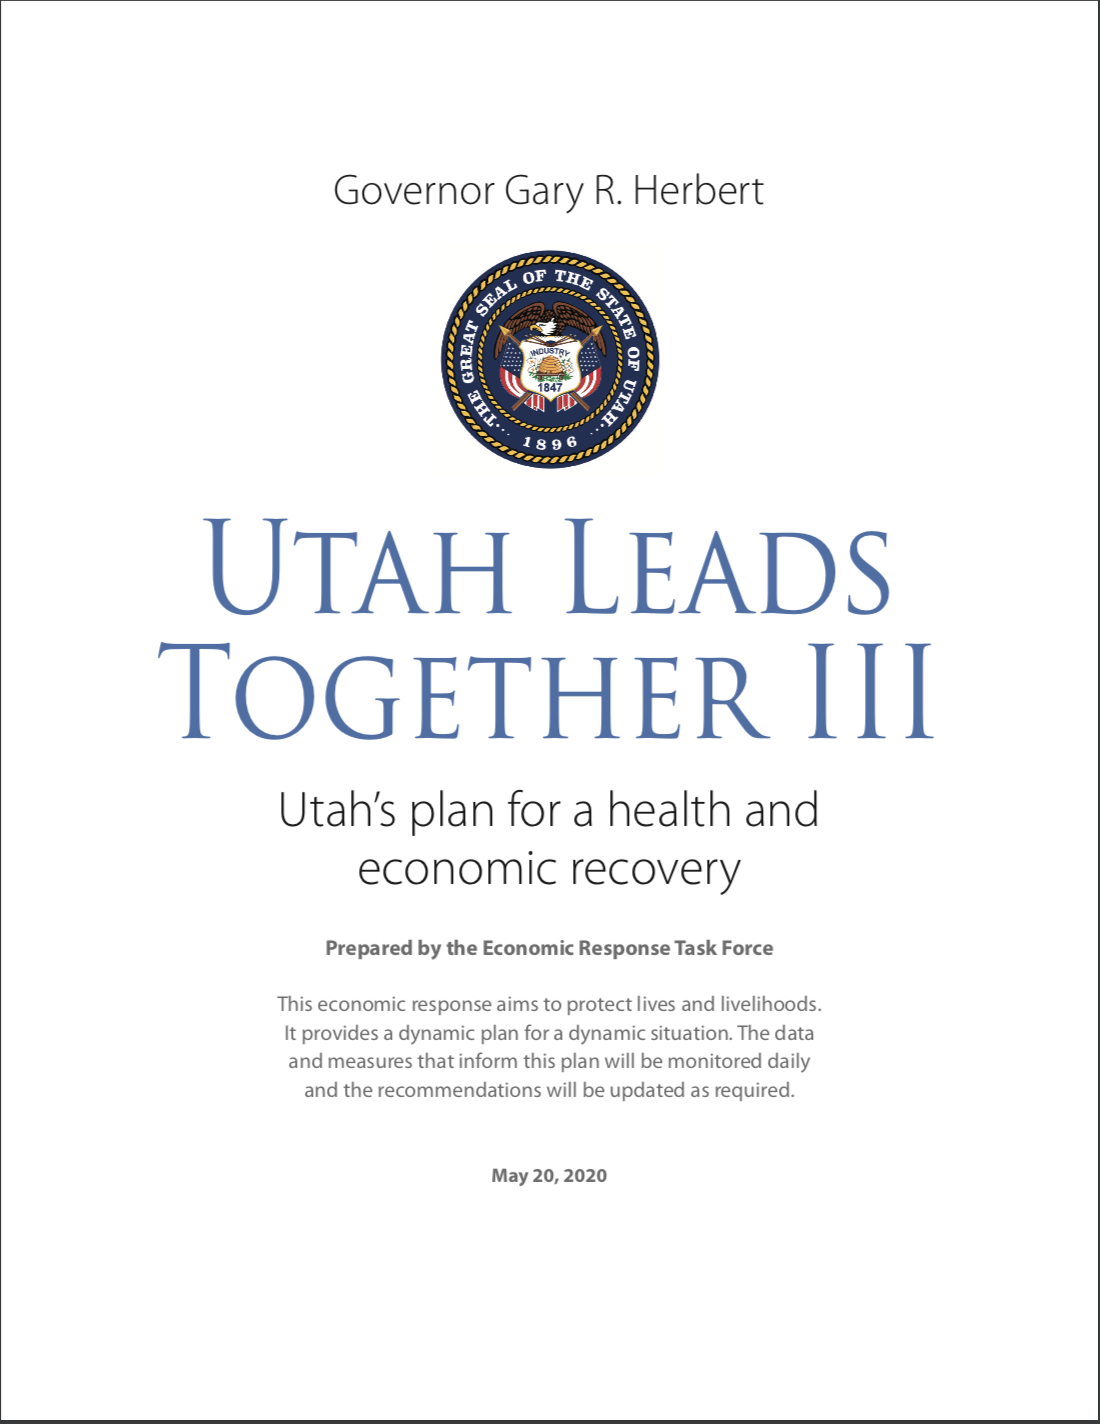 Governor Gary R. Herbert "Utah Leads Together 3.0" Image